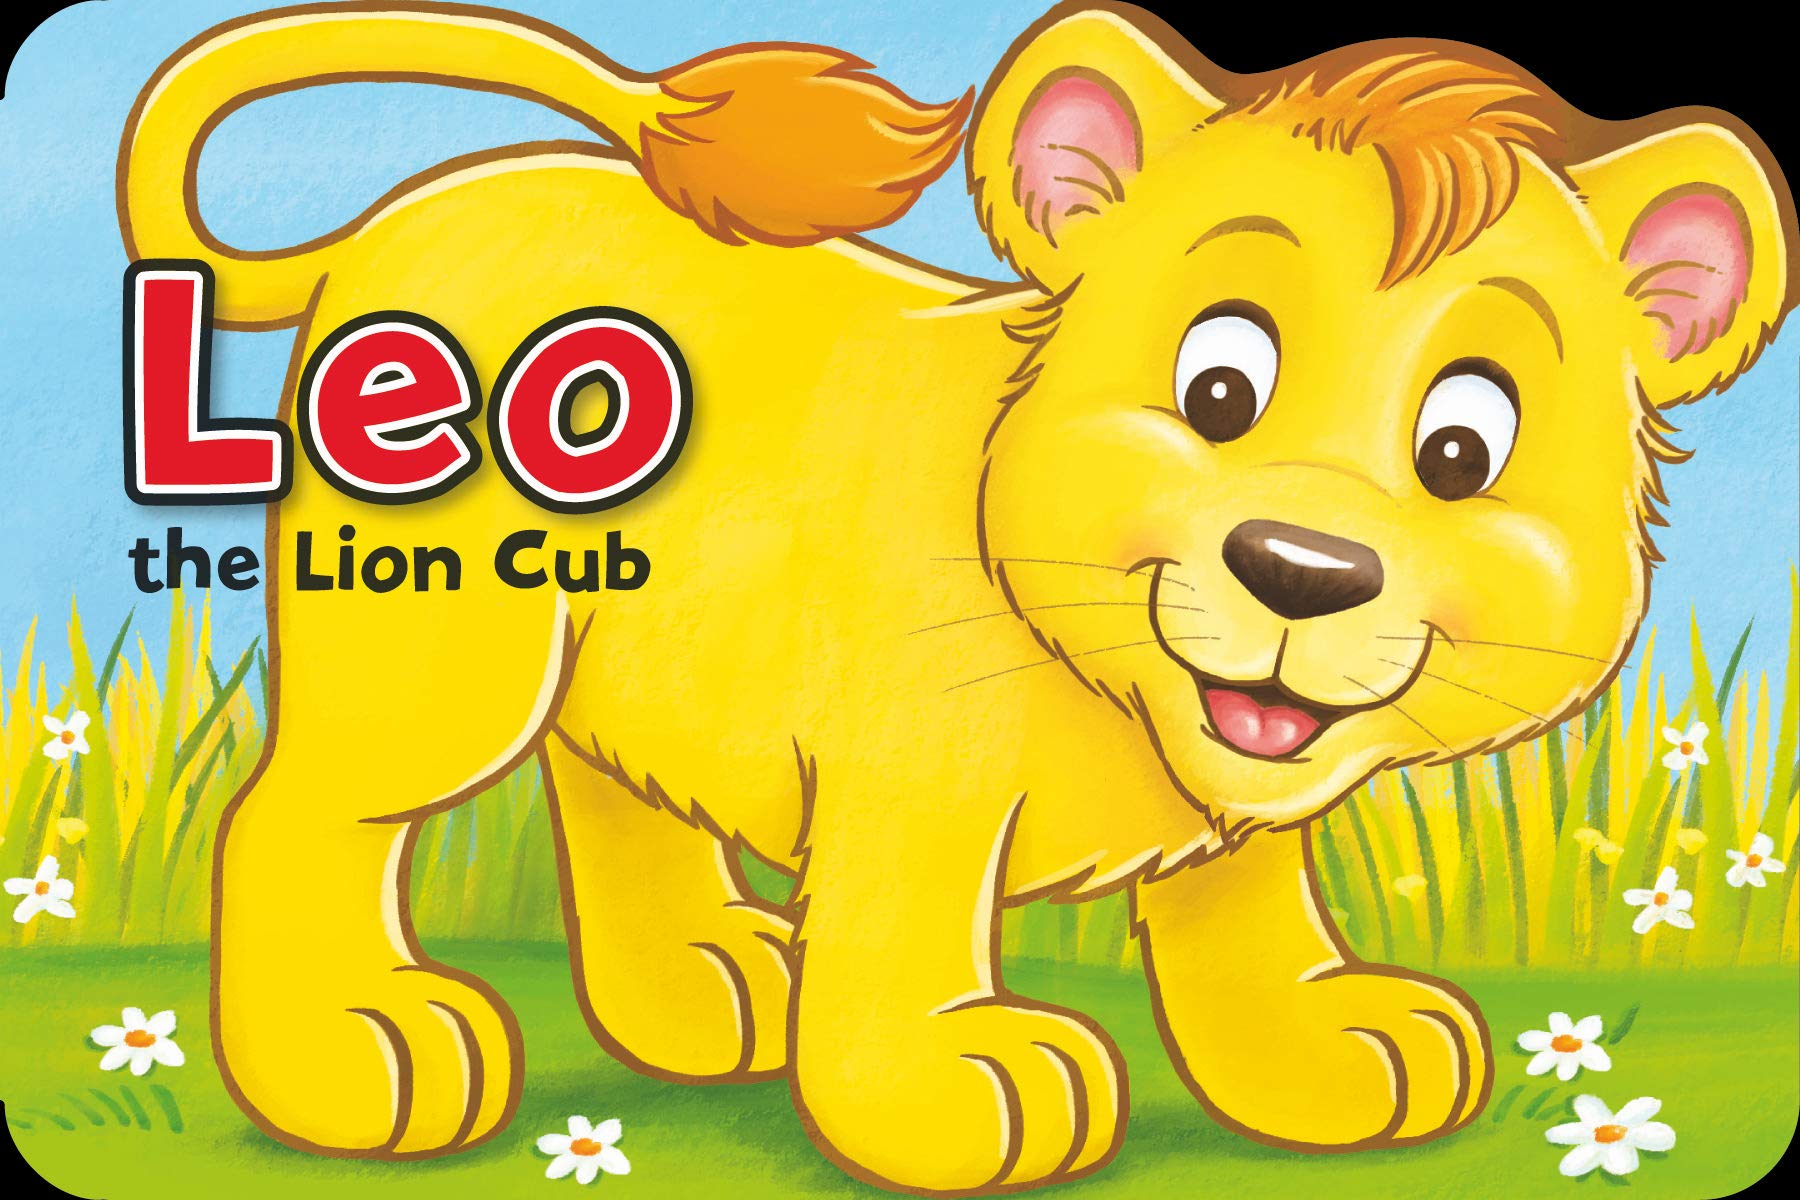 LEO THE LION CUB (PLAYTIME FUN)